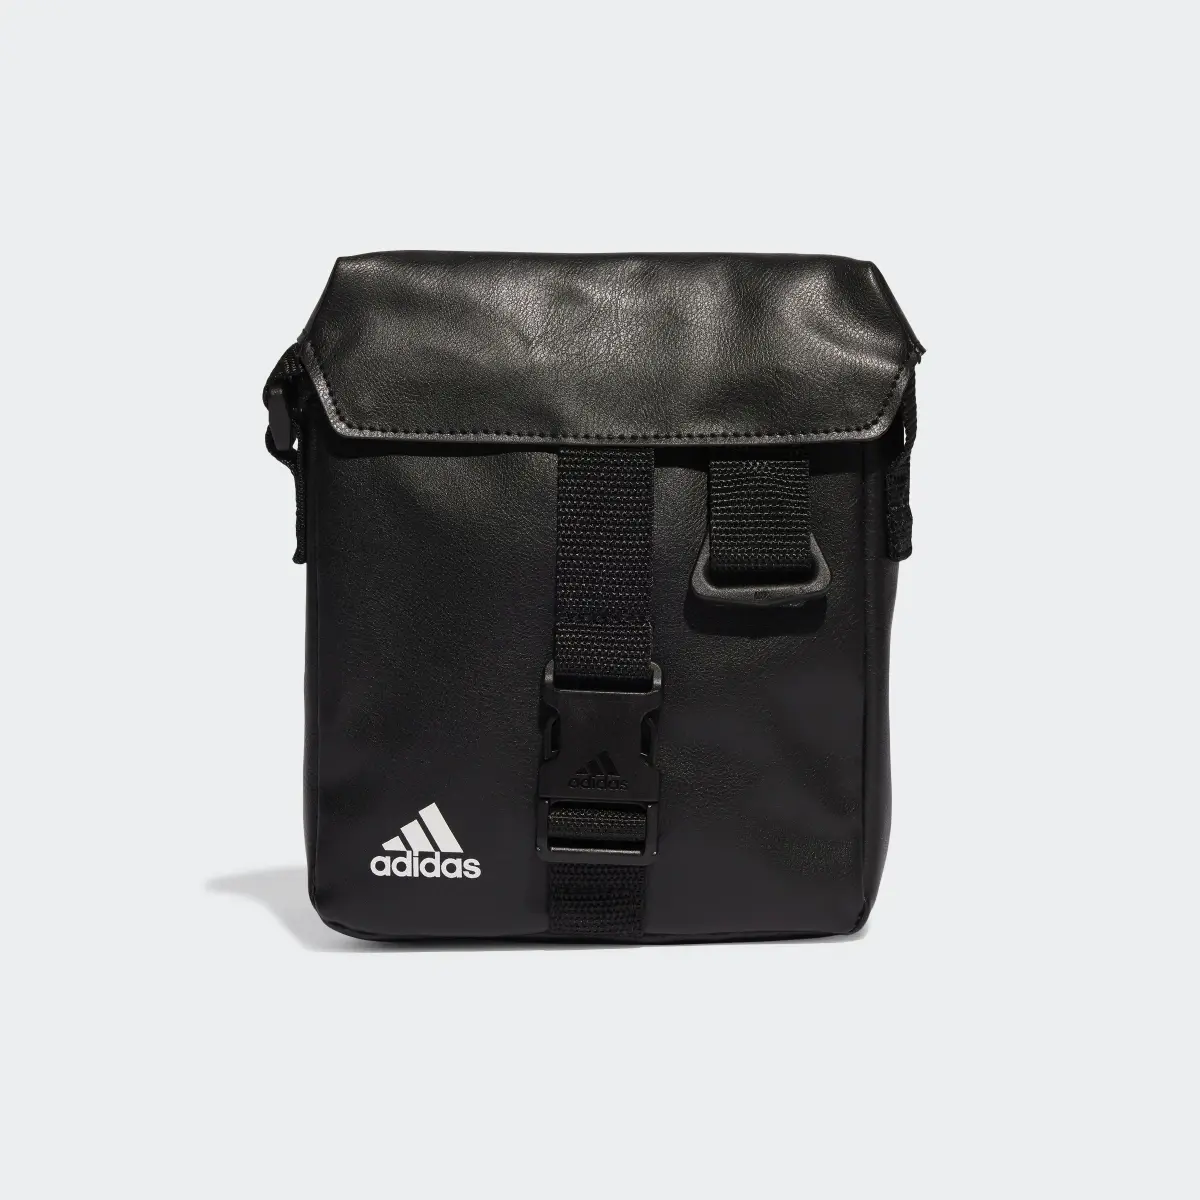 Adidas Torba Essentials Small Bag. 2